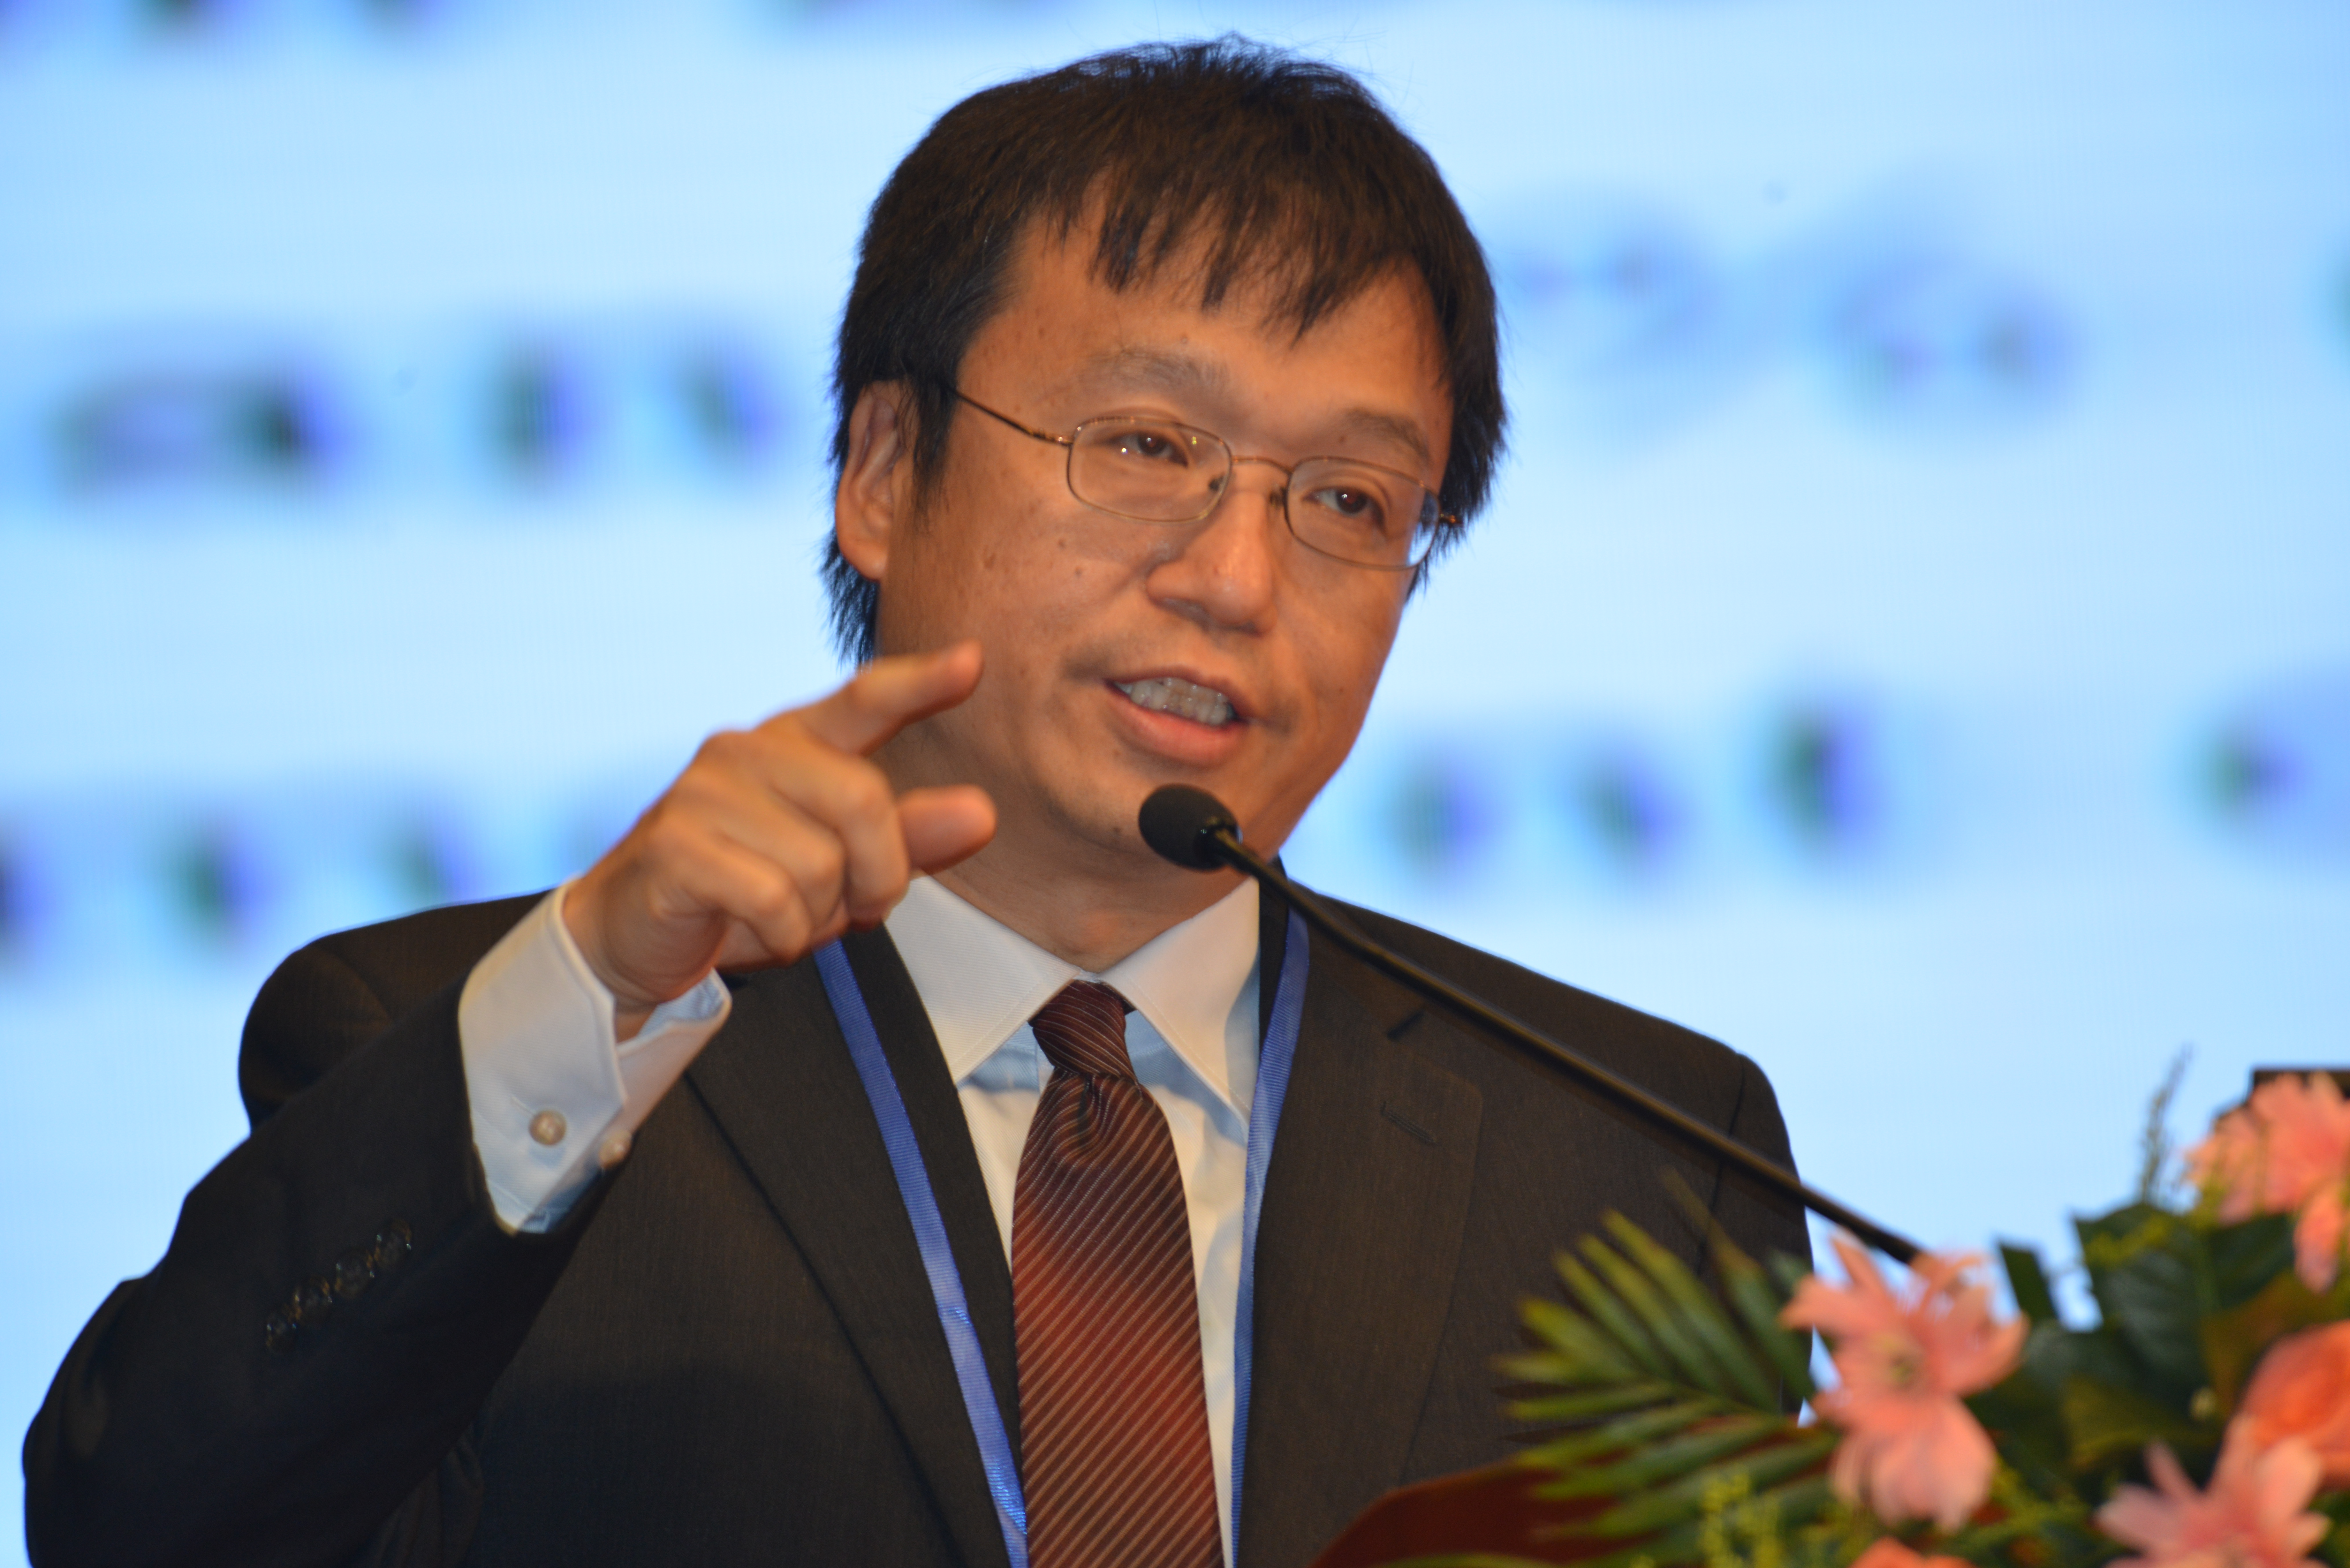 The distinguished Chinese economist Li Gan at keynote speeches